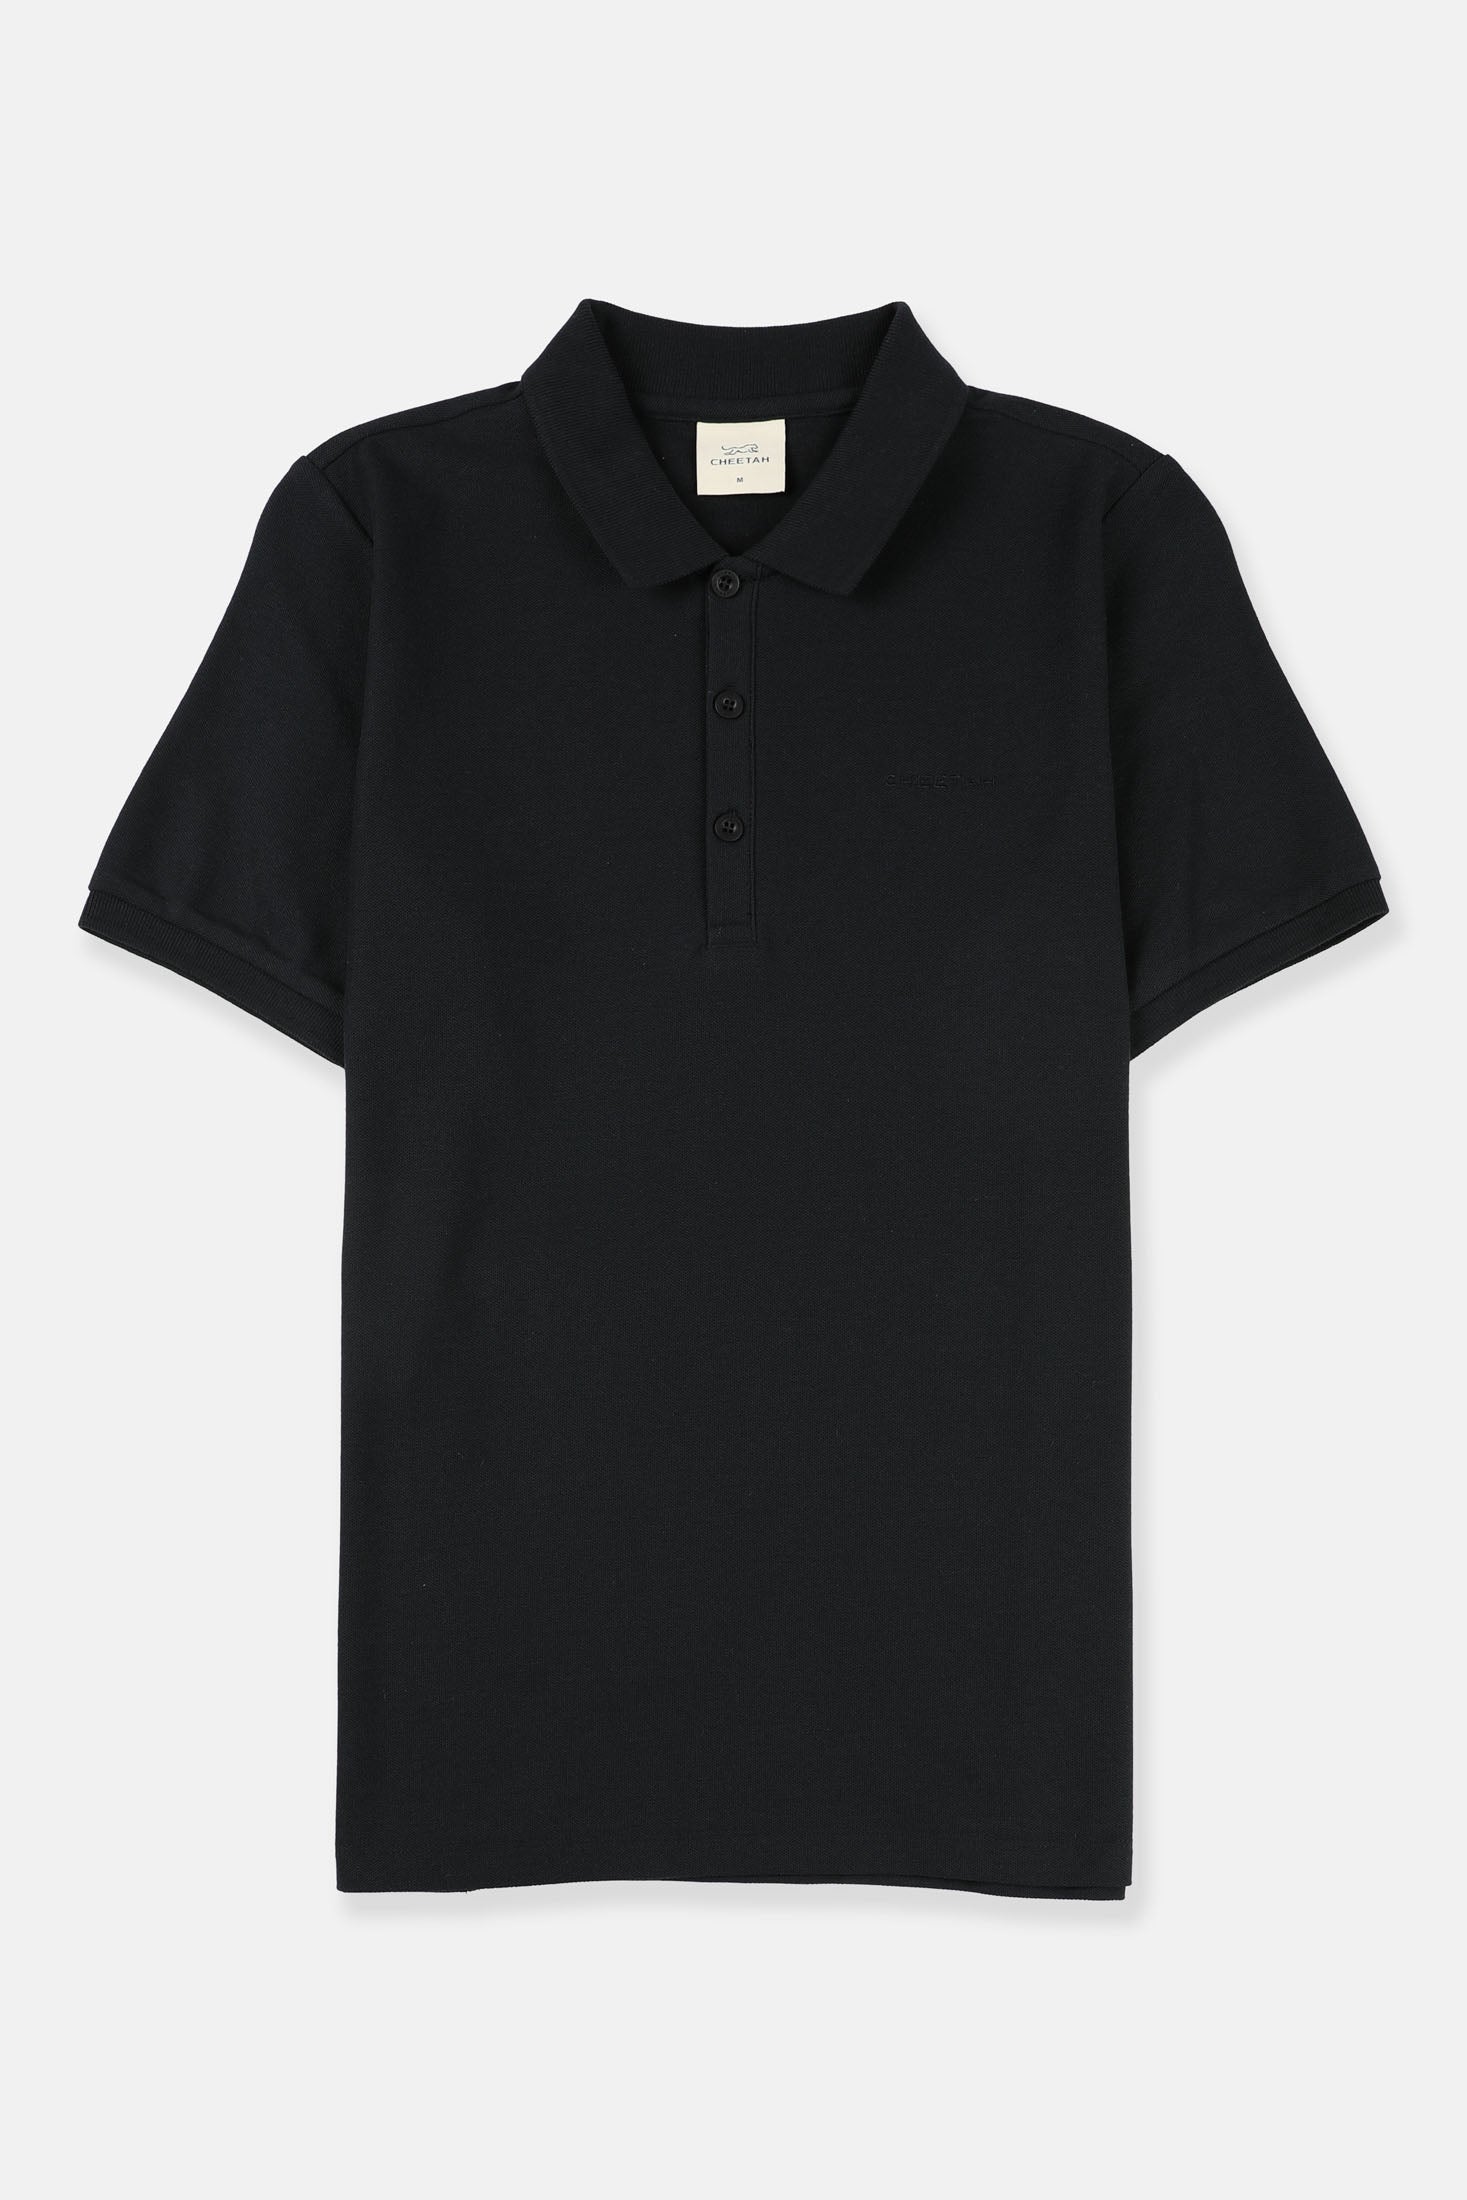 CHEETAH Women Basic Short Sleeve Polo Shirt - CL-70270